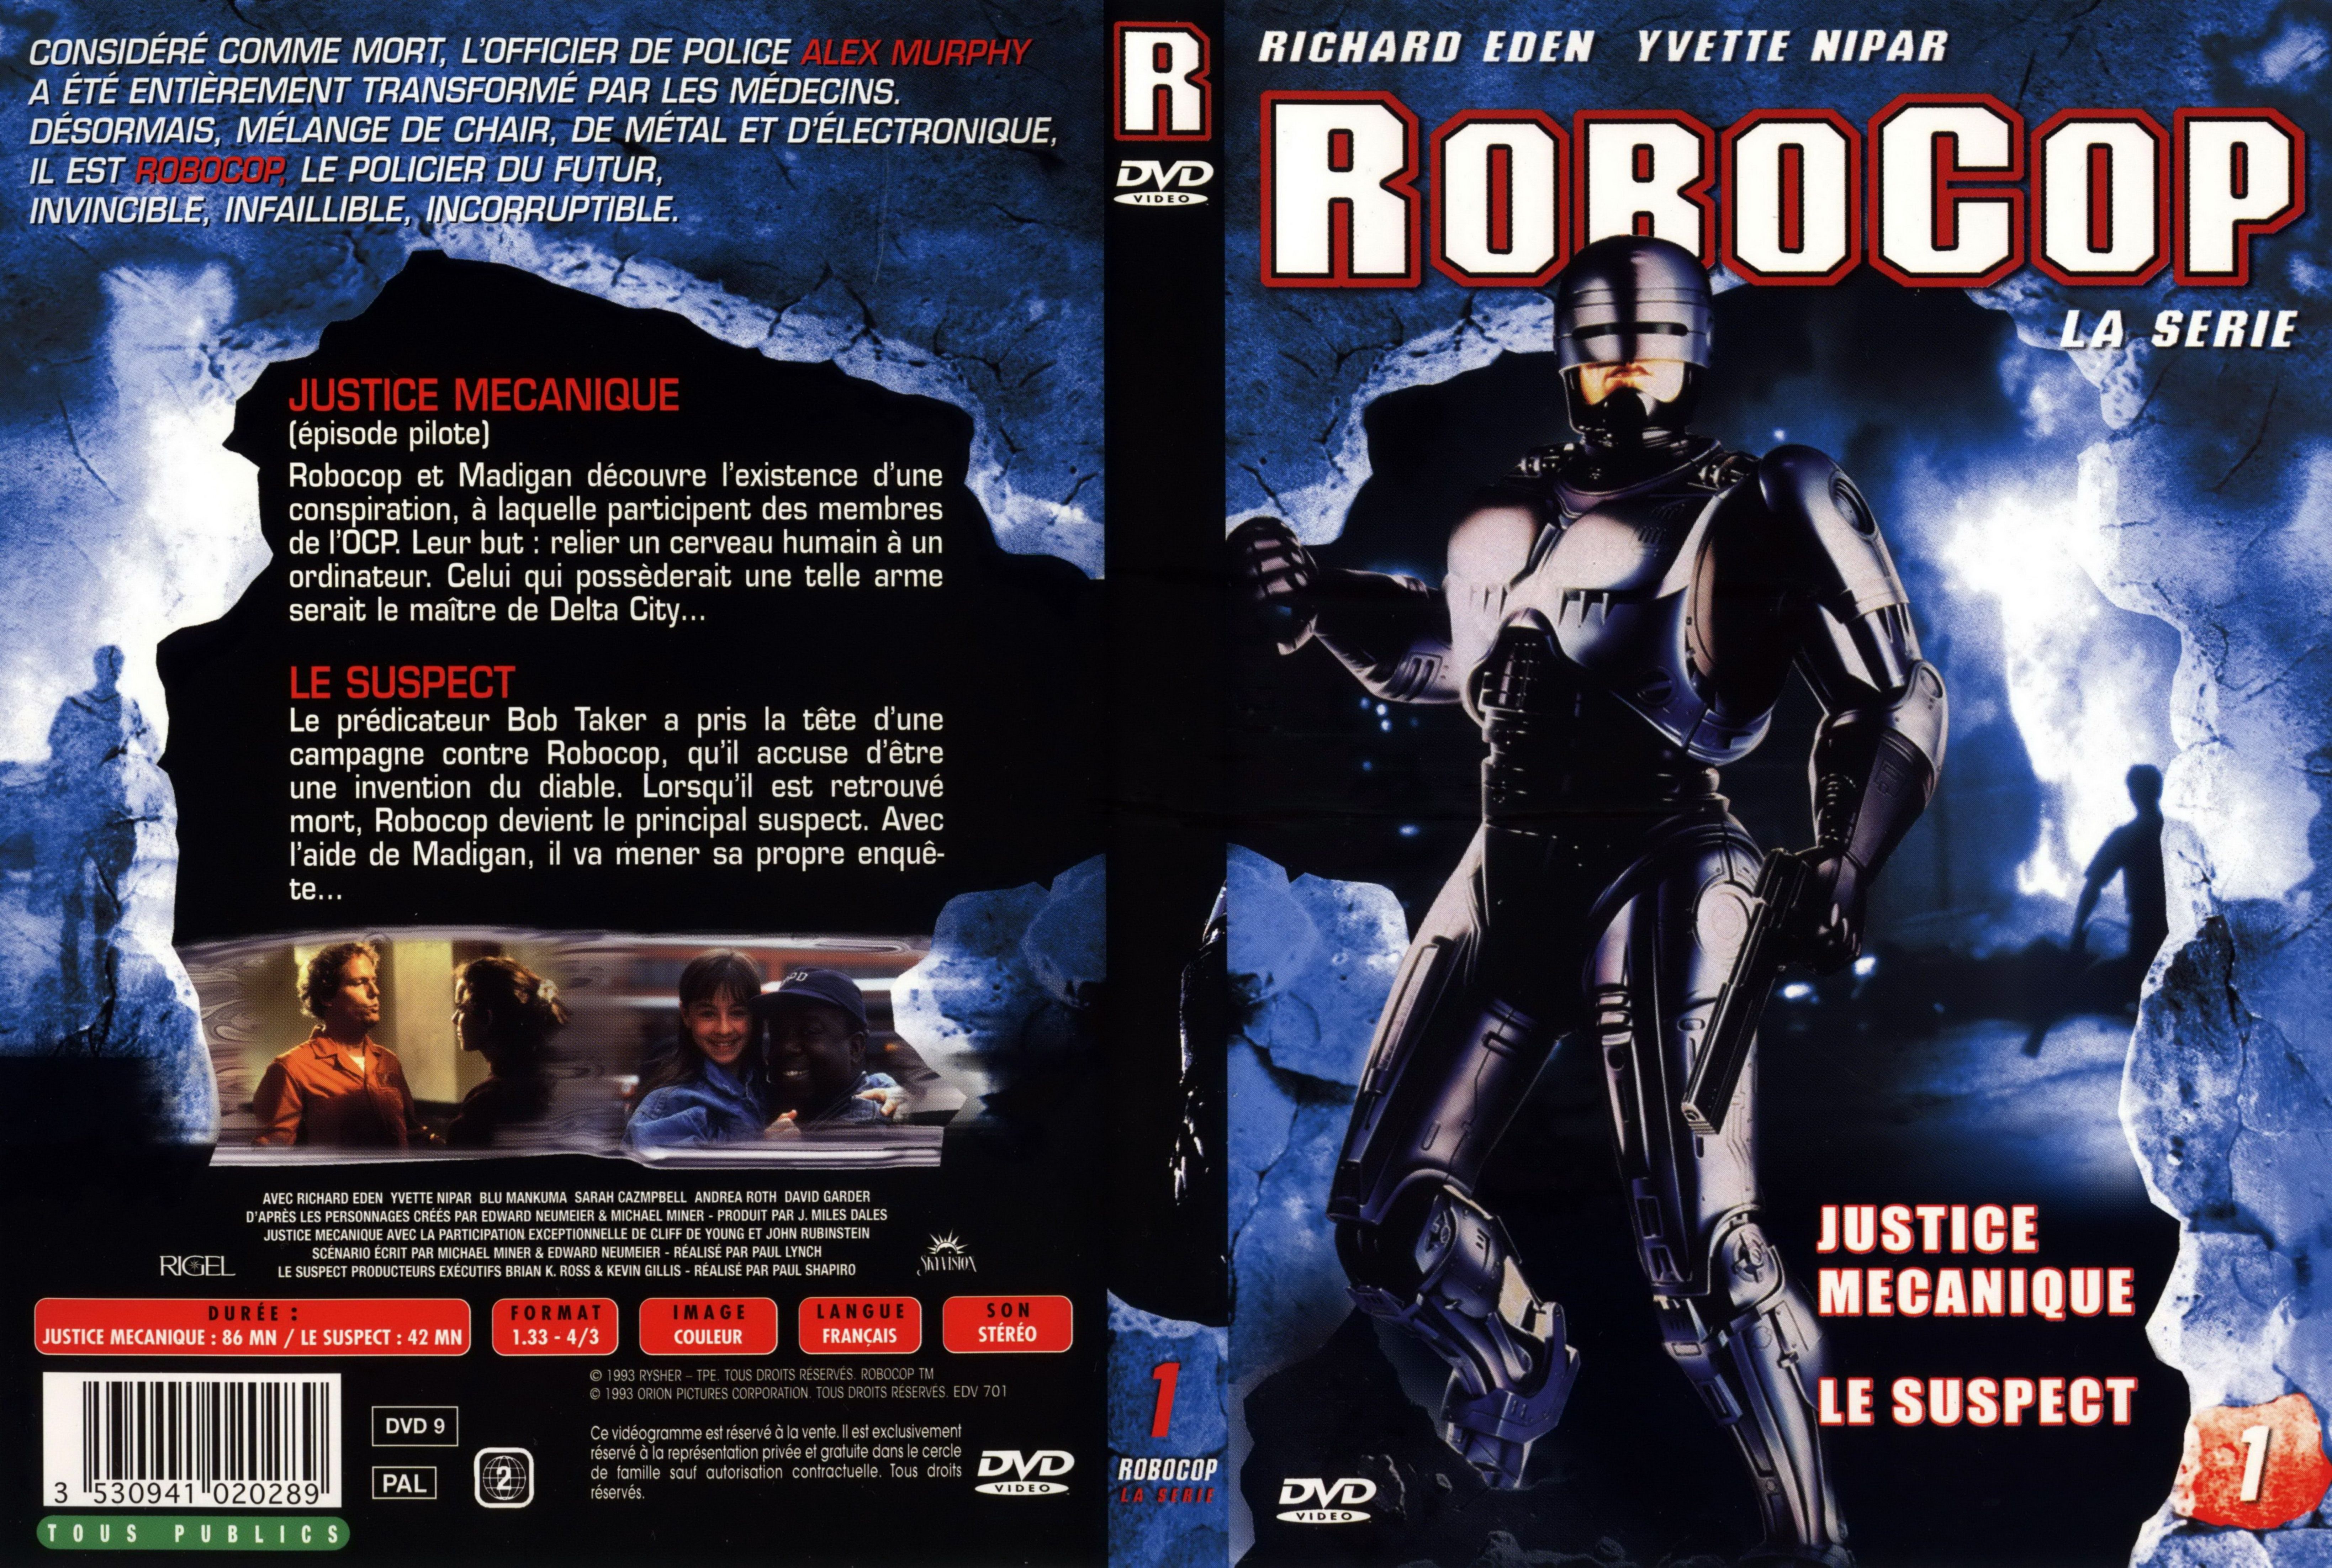 Jaquette DVD Robocop la srie vol 1